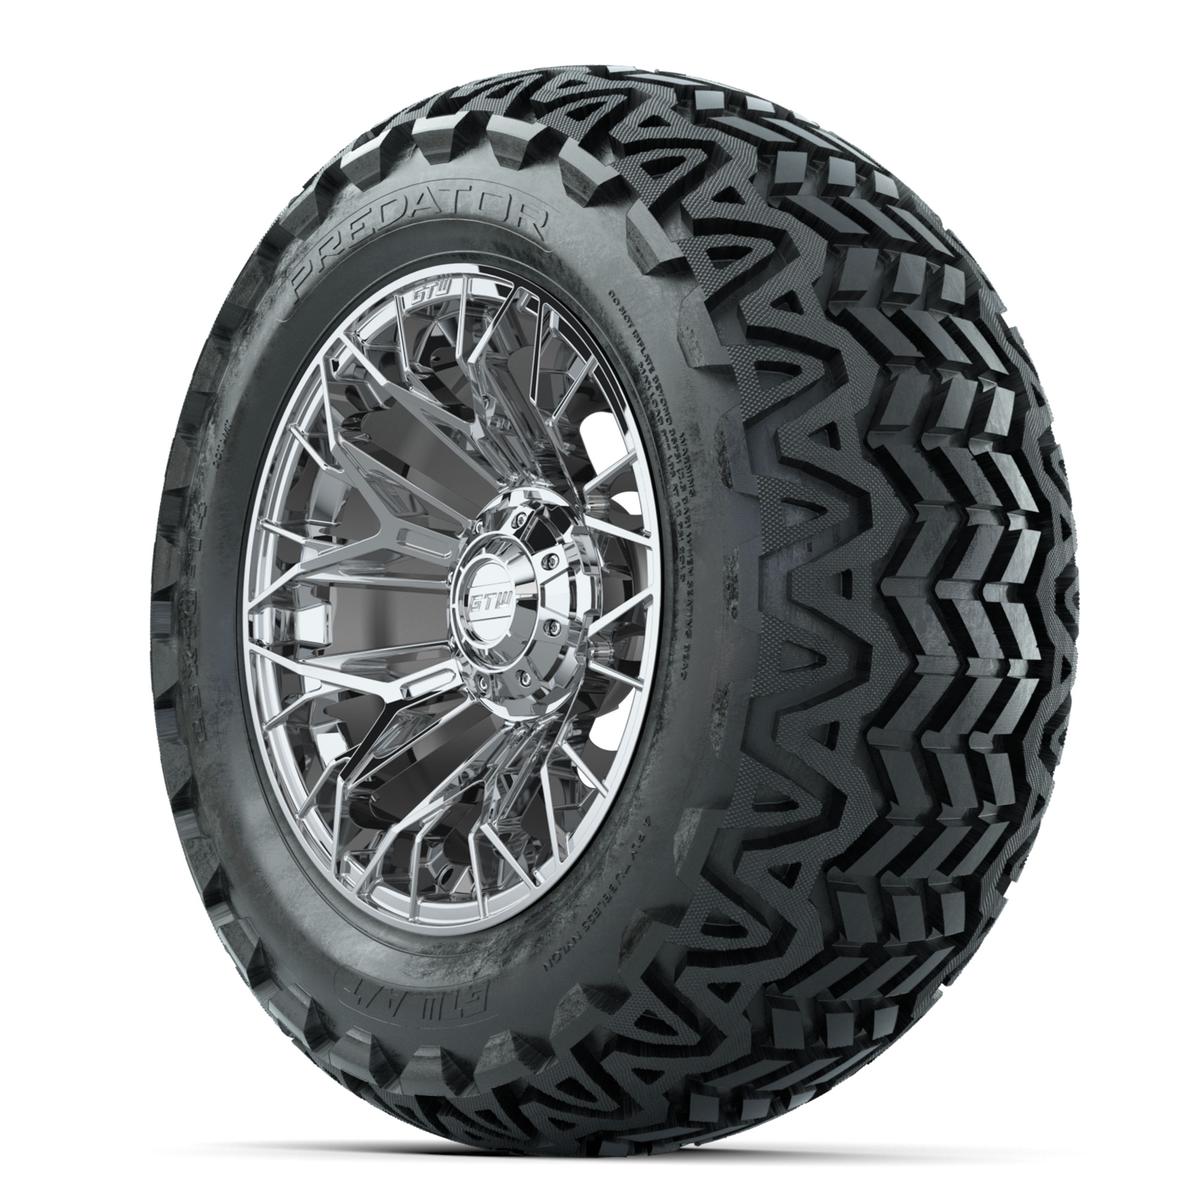 Set of (4) 14 in GTW® Stellar Chrome Wheels with 23x10-14 Predator All-Terrain Tires